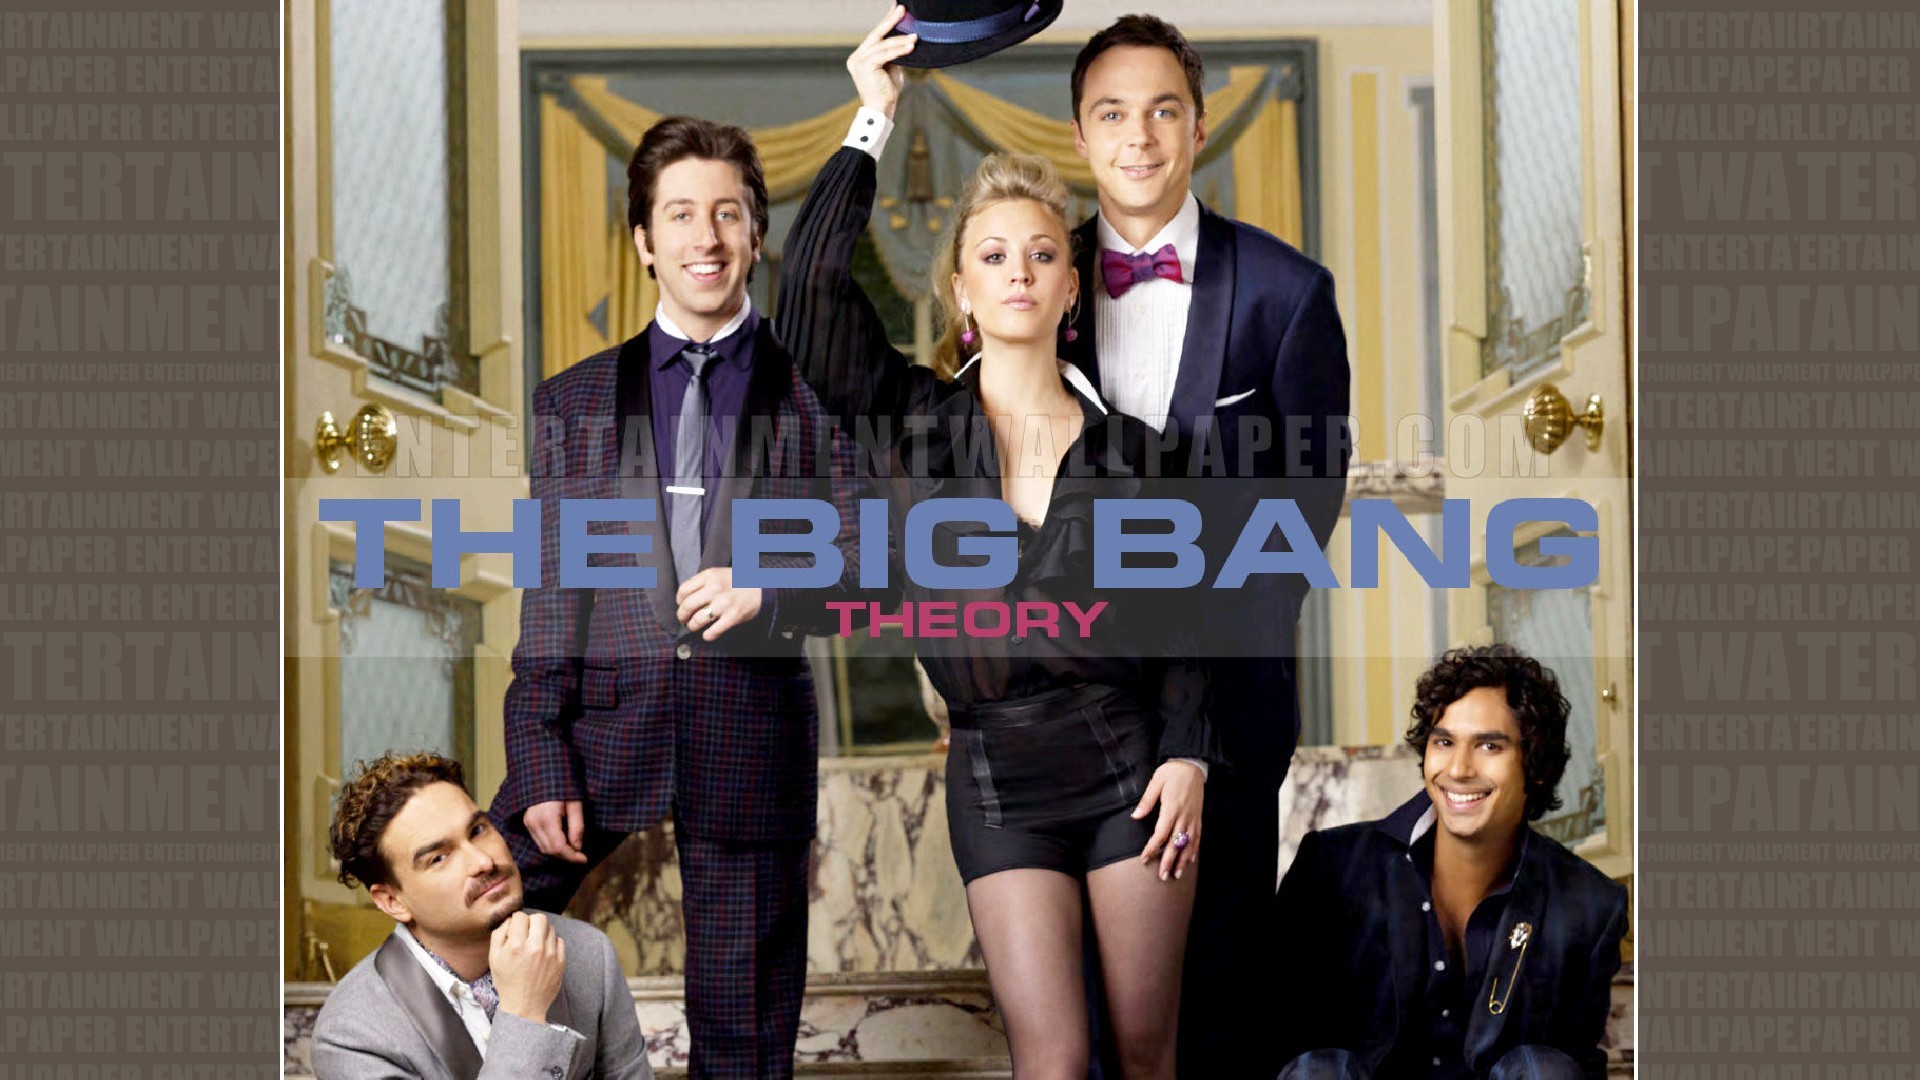 1920x1080 The Big Bang Theory Wallpaper - Original size, download now.